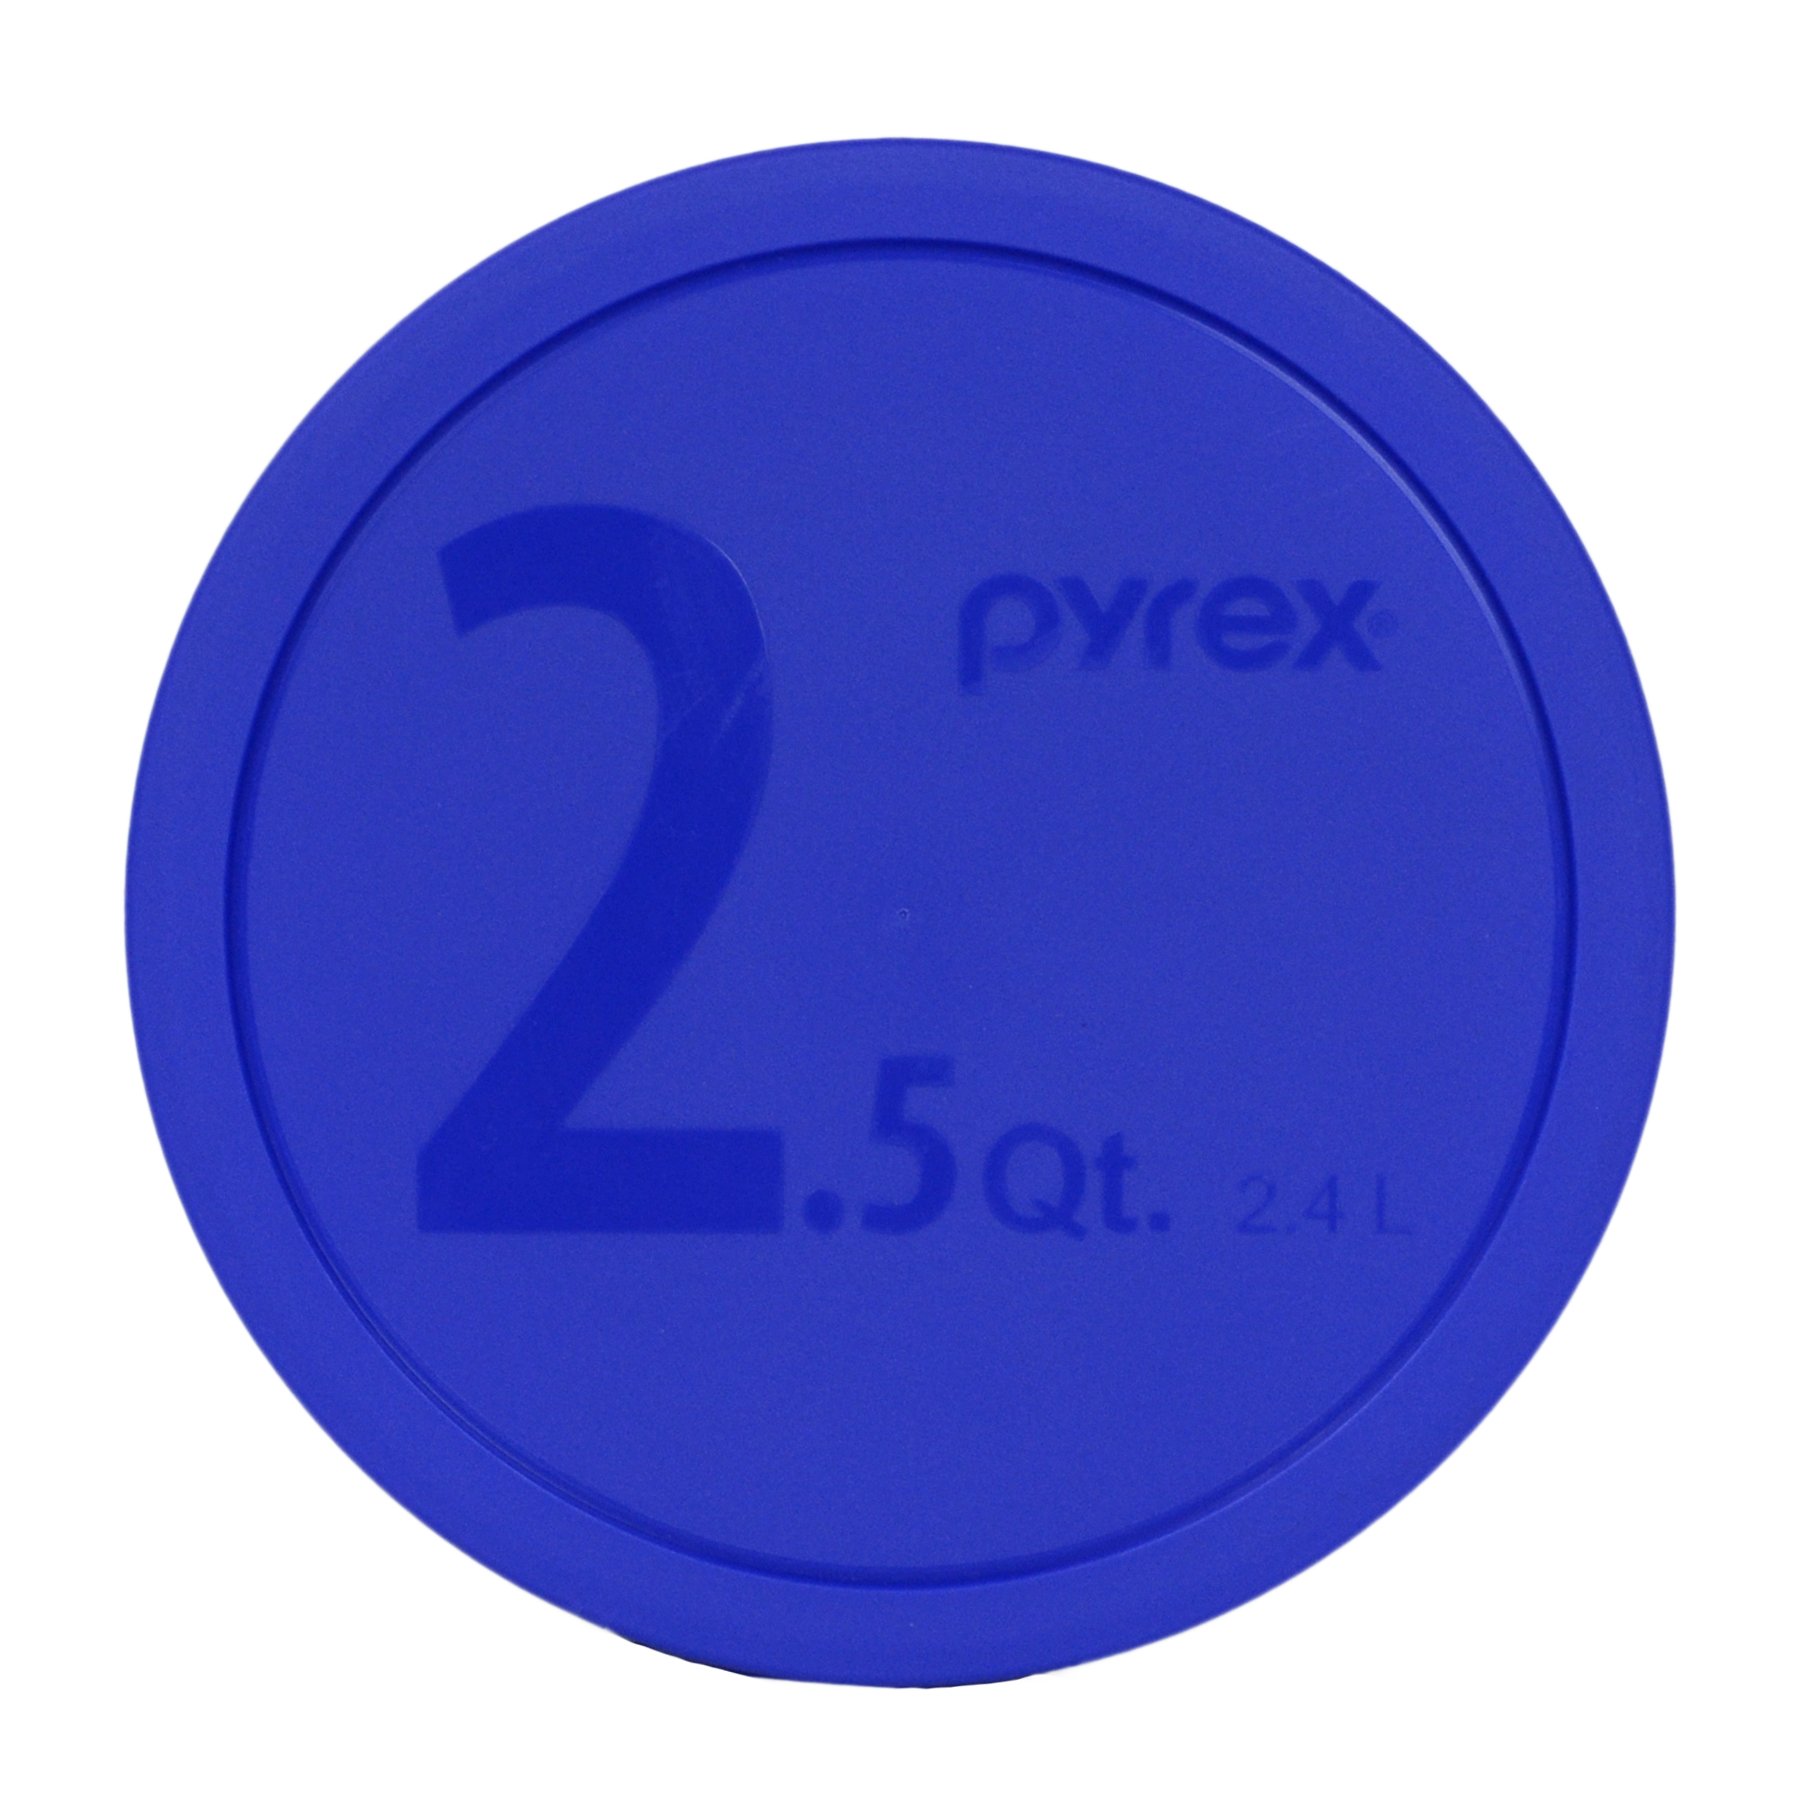 Pyrex (1) 325-PC Blue 2.5 Quart (1)323-PC Red 1.5 Quart (1) 322-PC Blue 1 Quart Mixing Bowl Lids Made in the USA